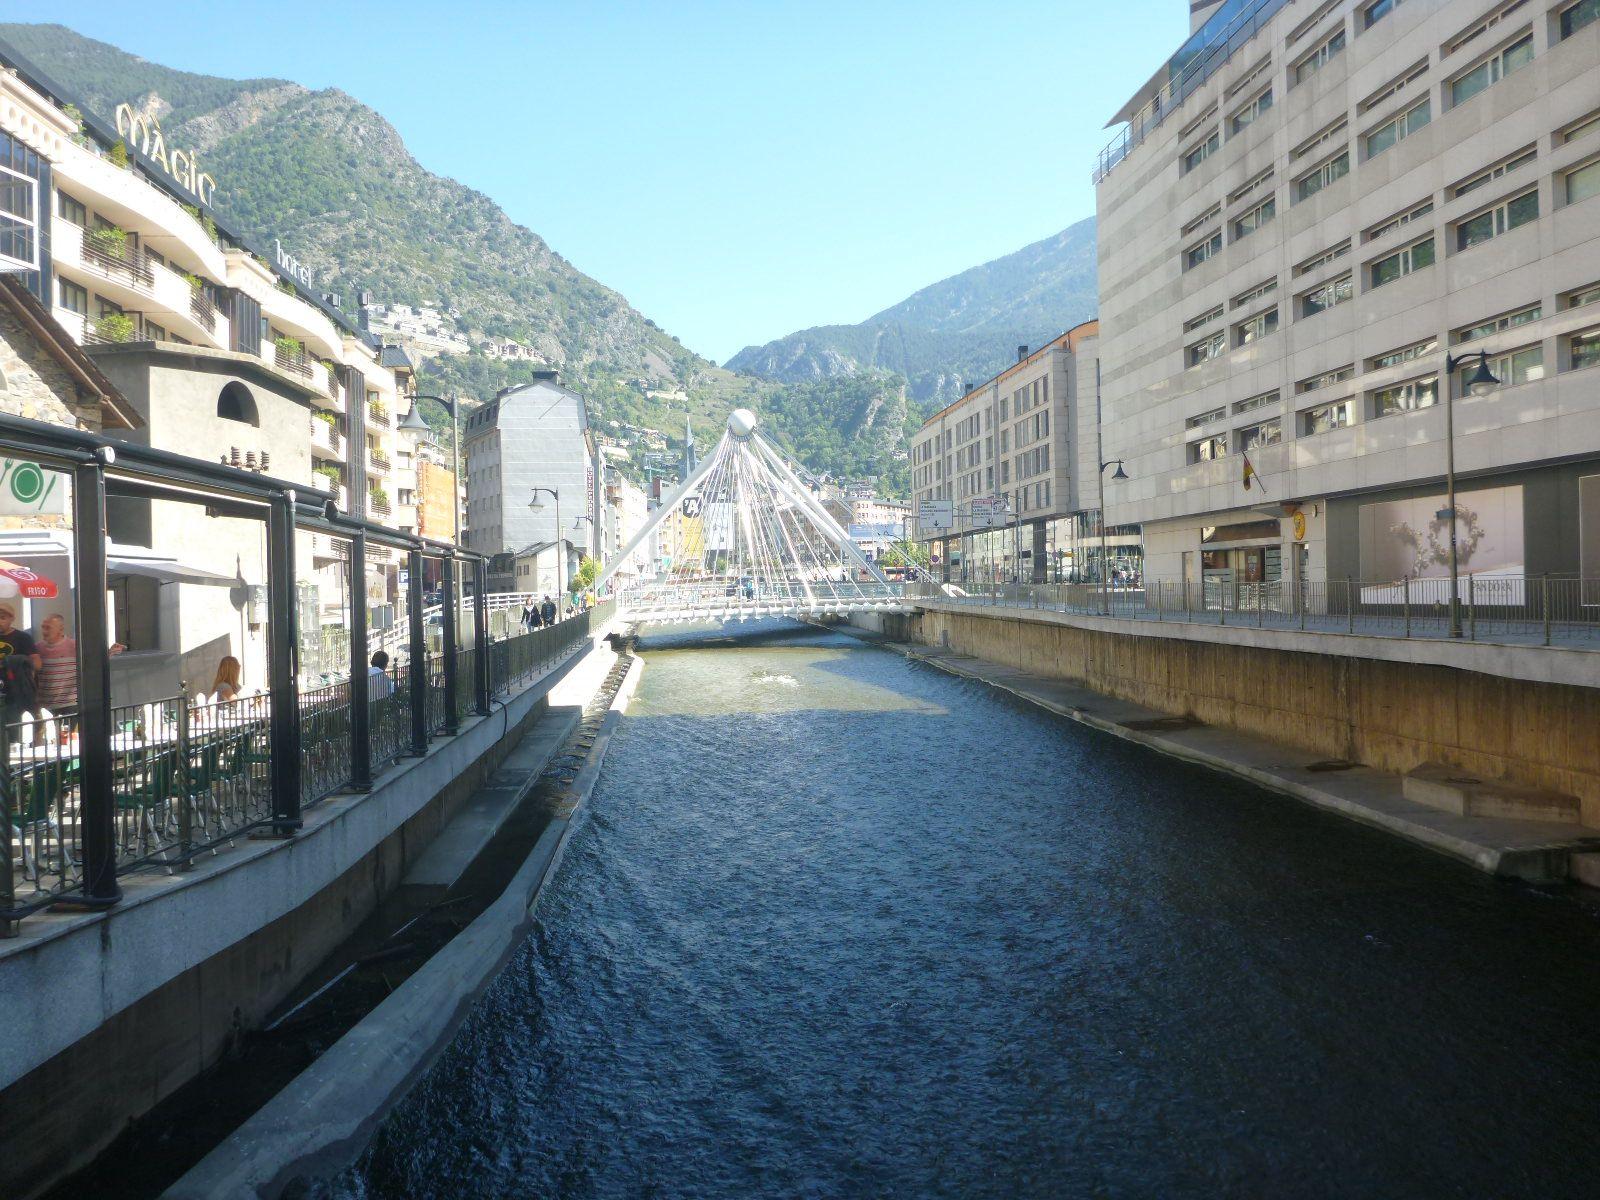 Backpacking in Andorra: Sights in Andorra La Vella The